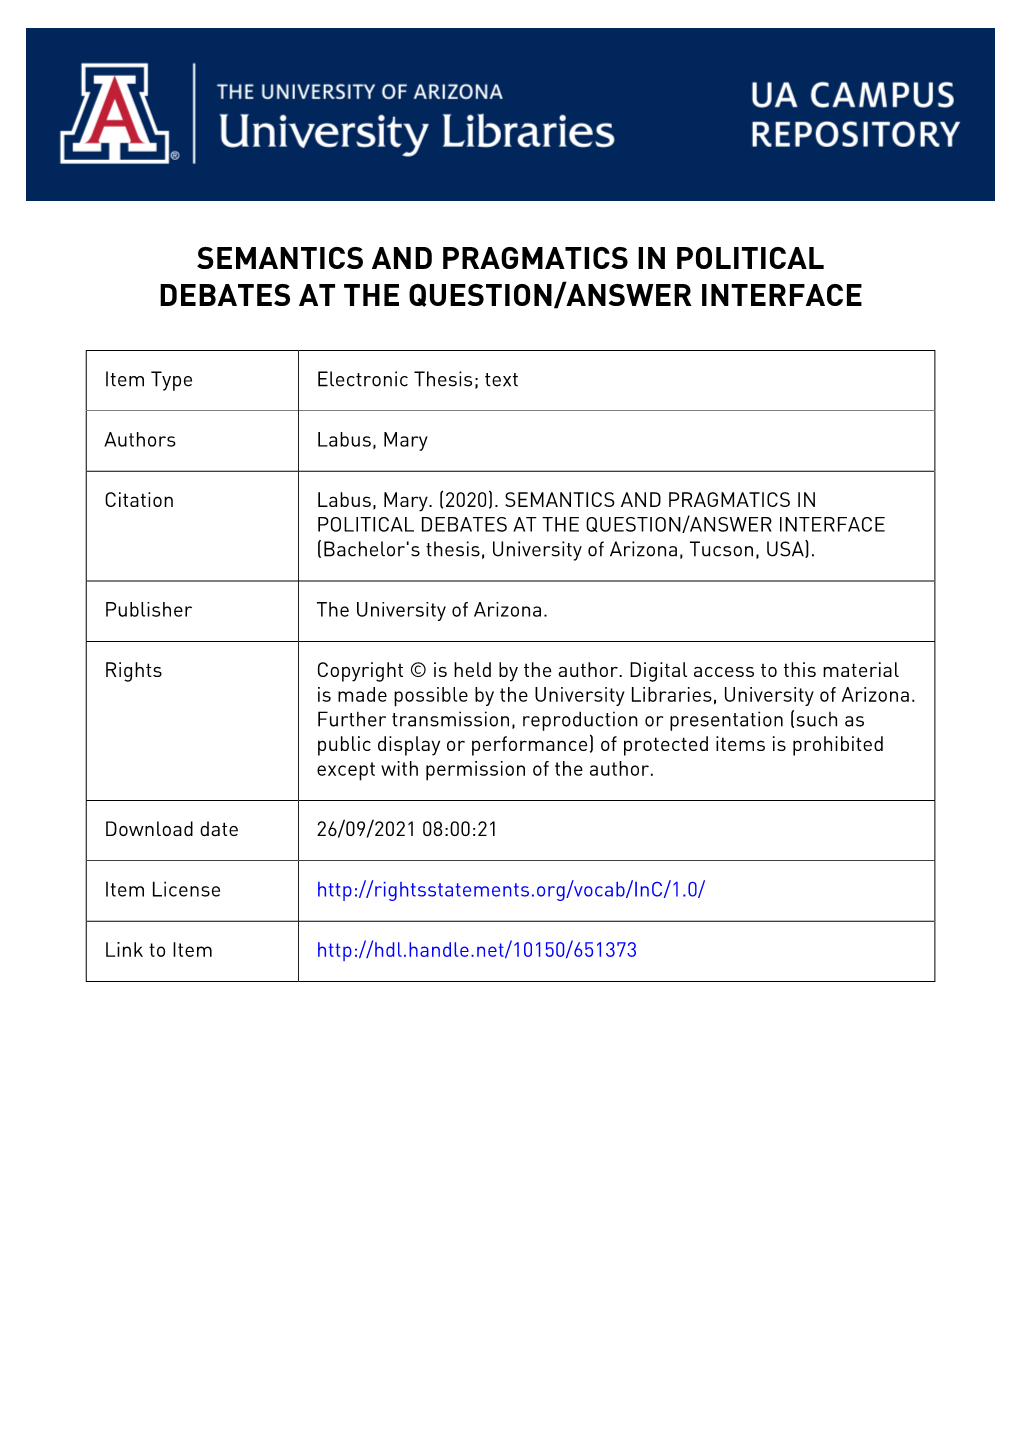 Semantics and Pragmatics in Political Debates at the Question/Answer Interface